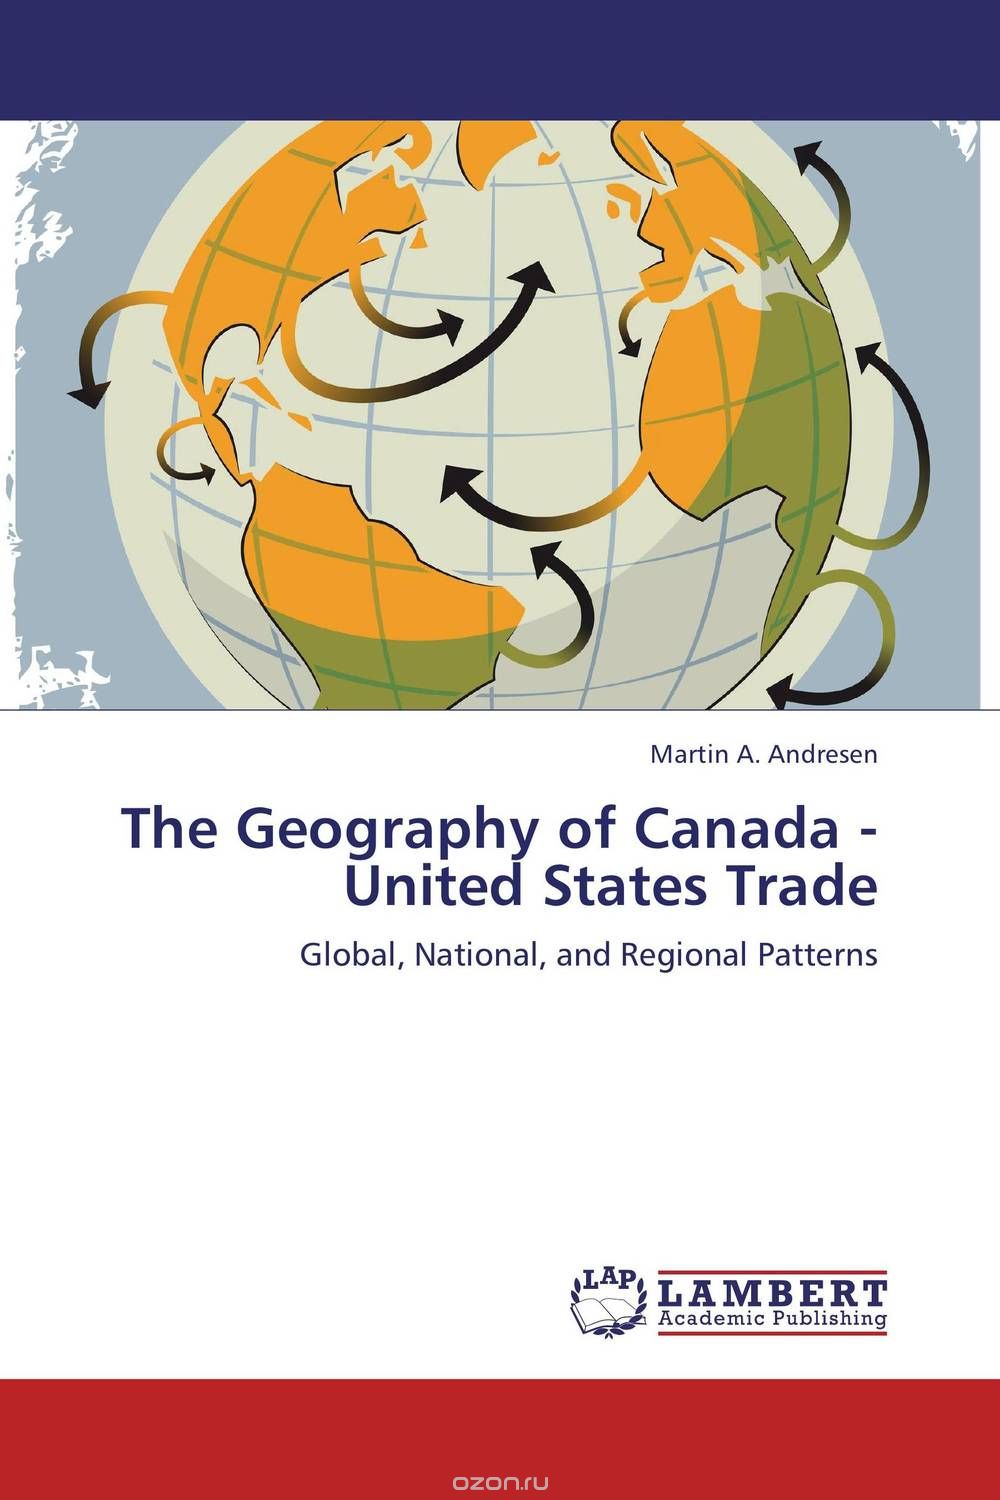 Скачать книгу "The Geography of Canada - United States Trade"